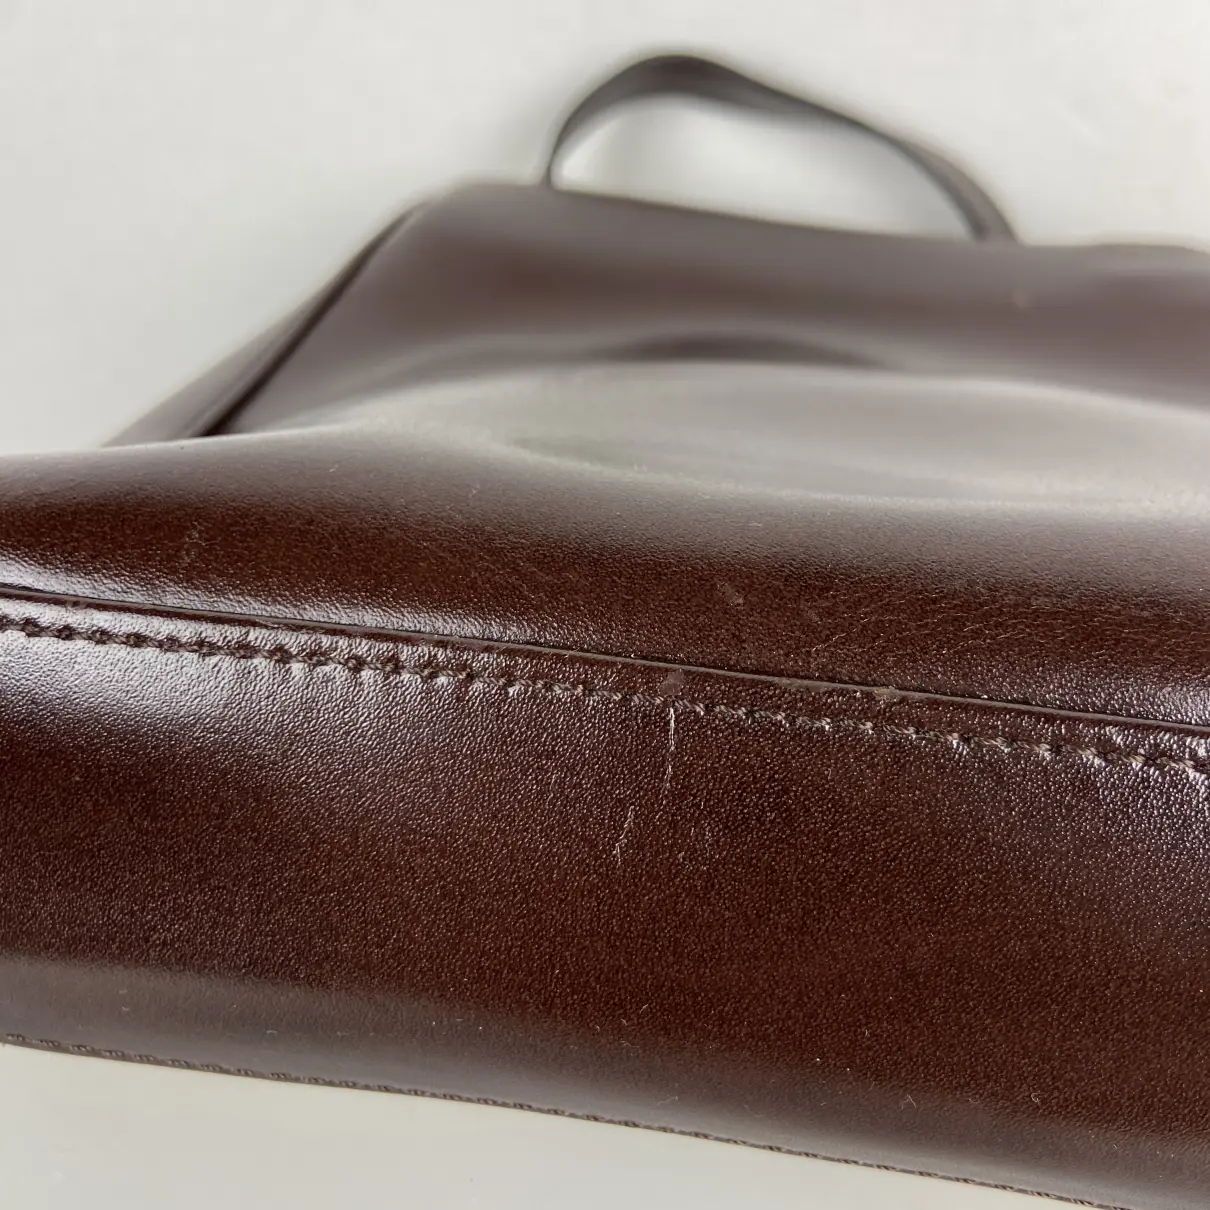 Roseau patent leather crossbody bag Longchamp